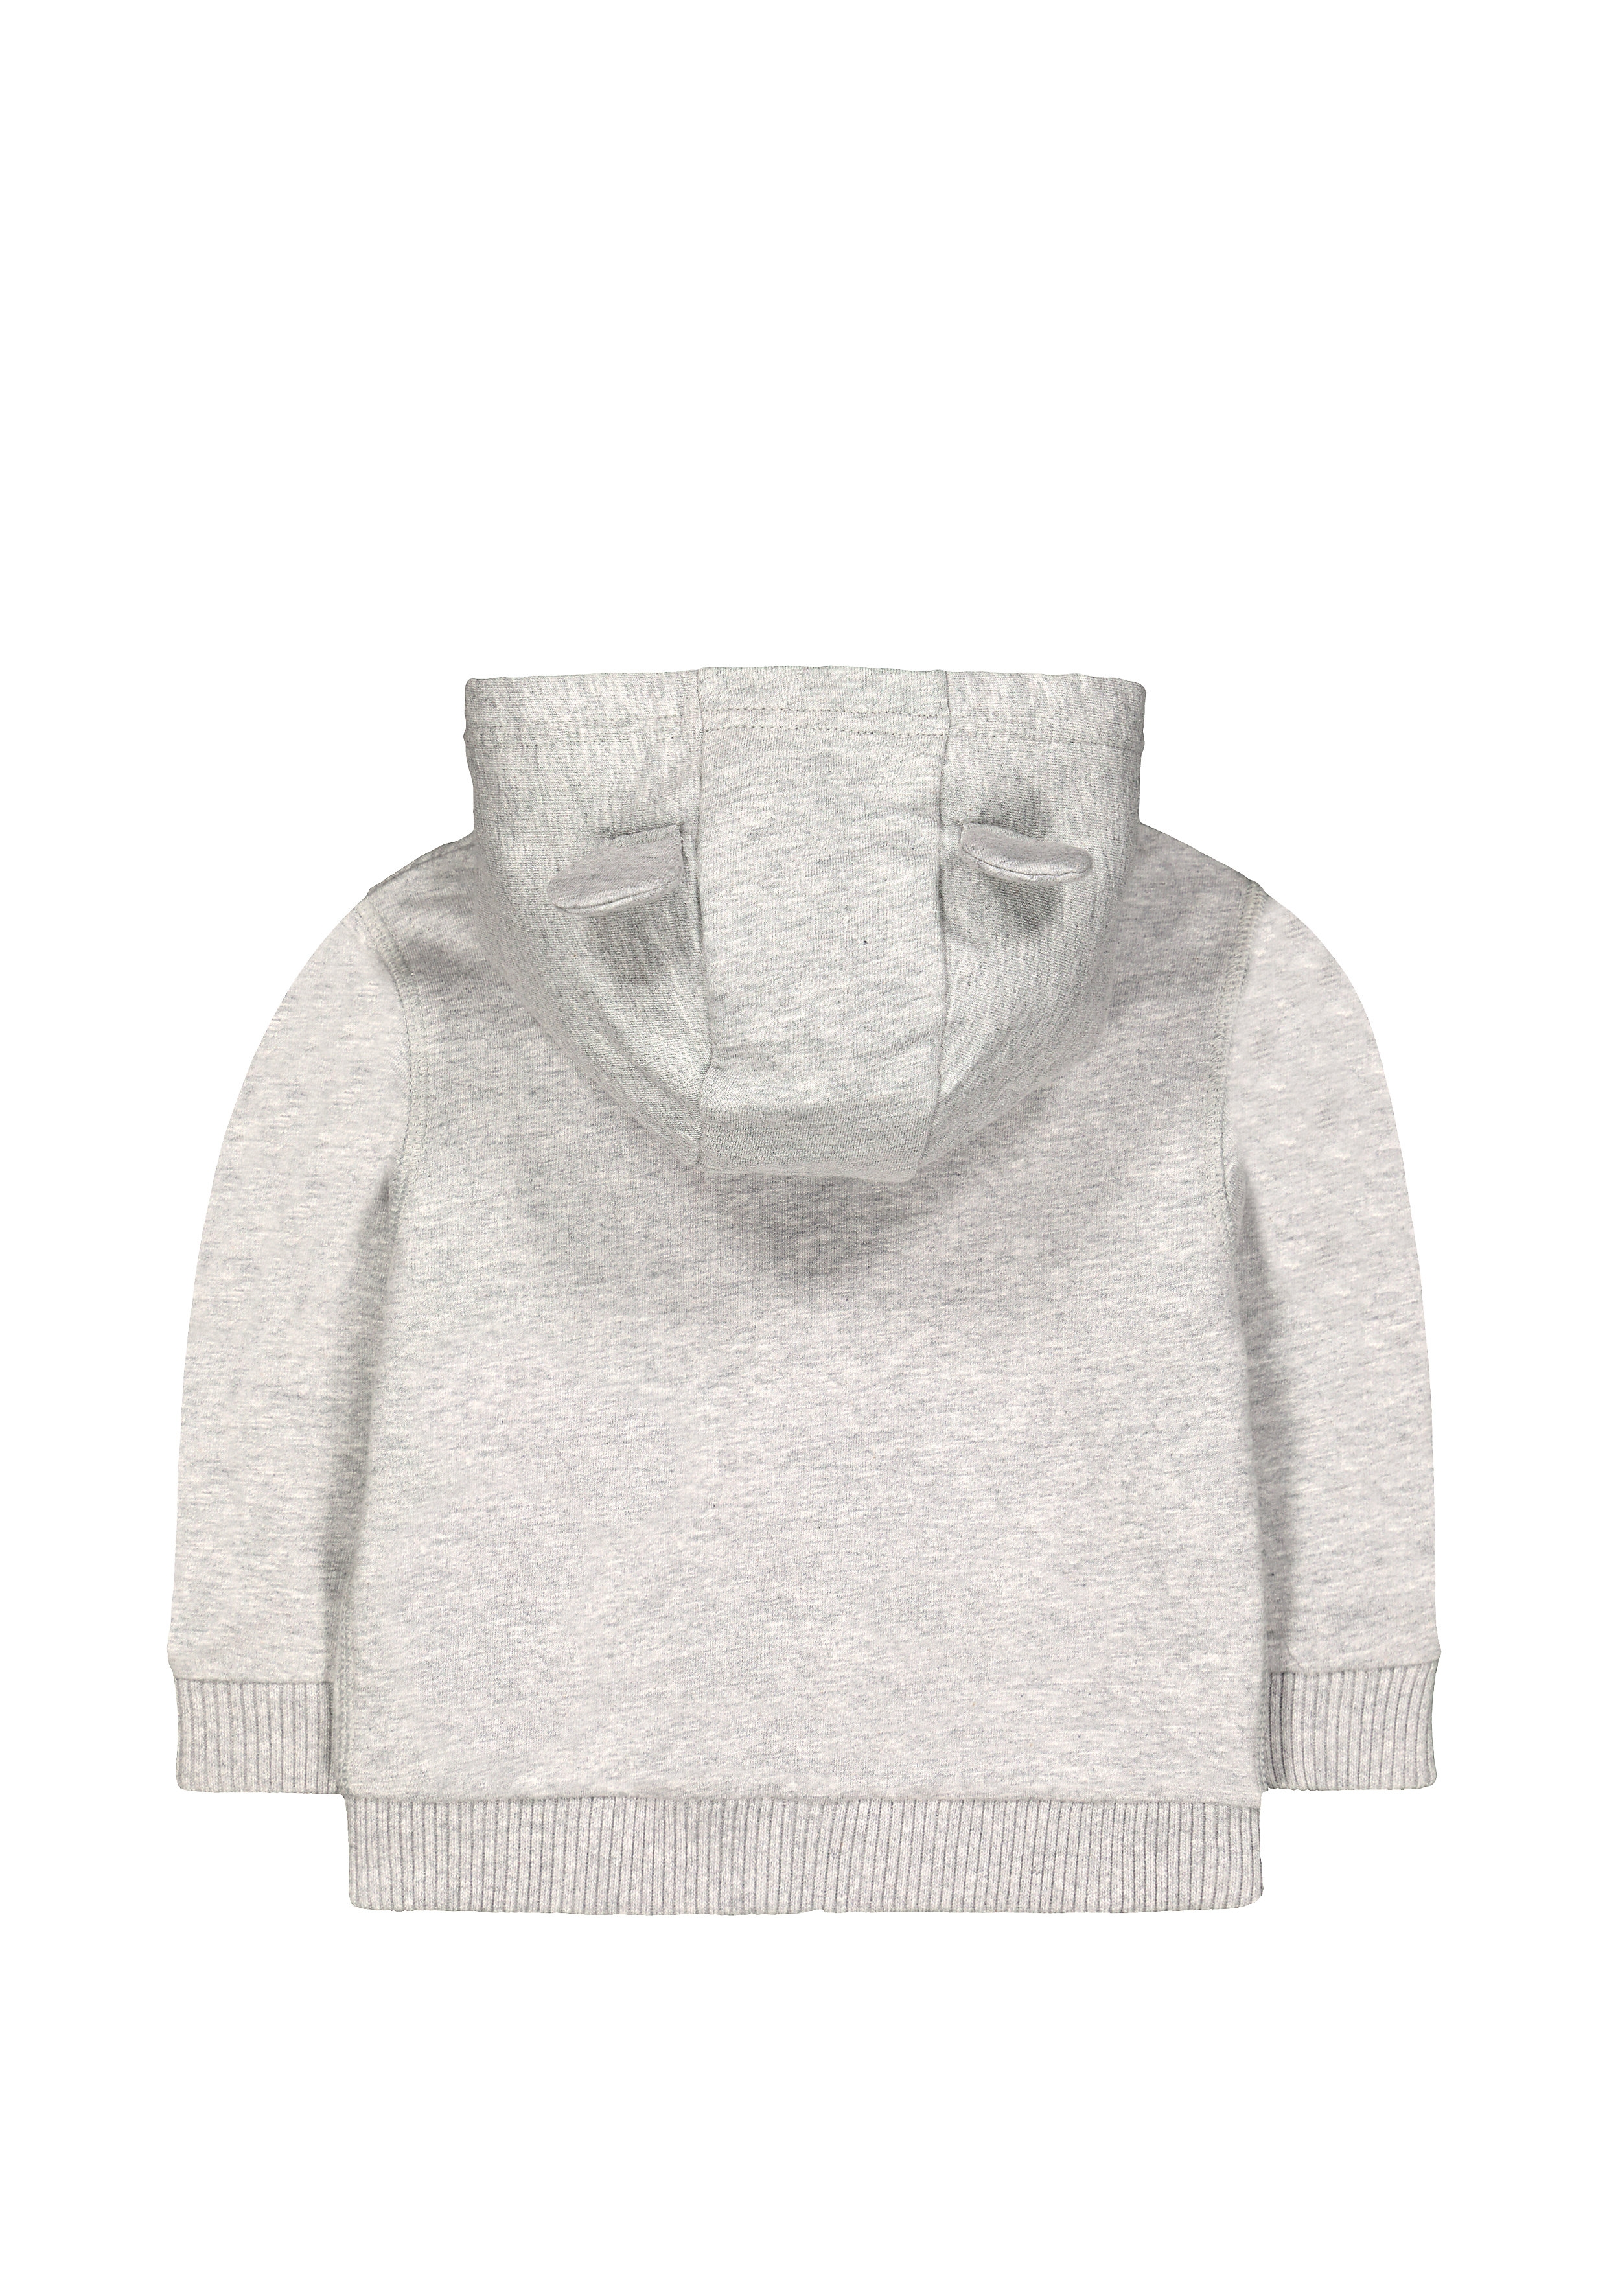 Mothercare | Boys Full Sleeves Hooded Sweatshirt 3D Details - Grey